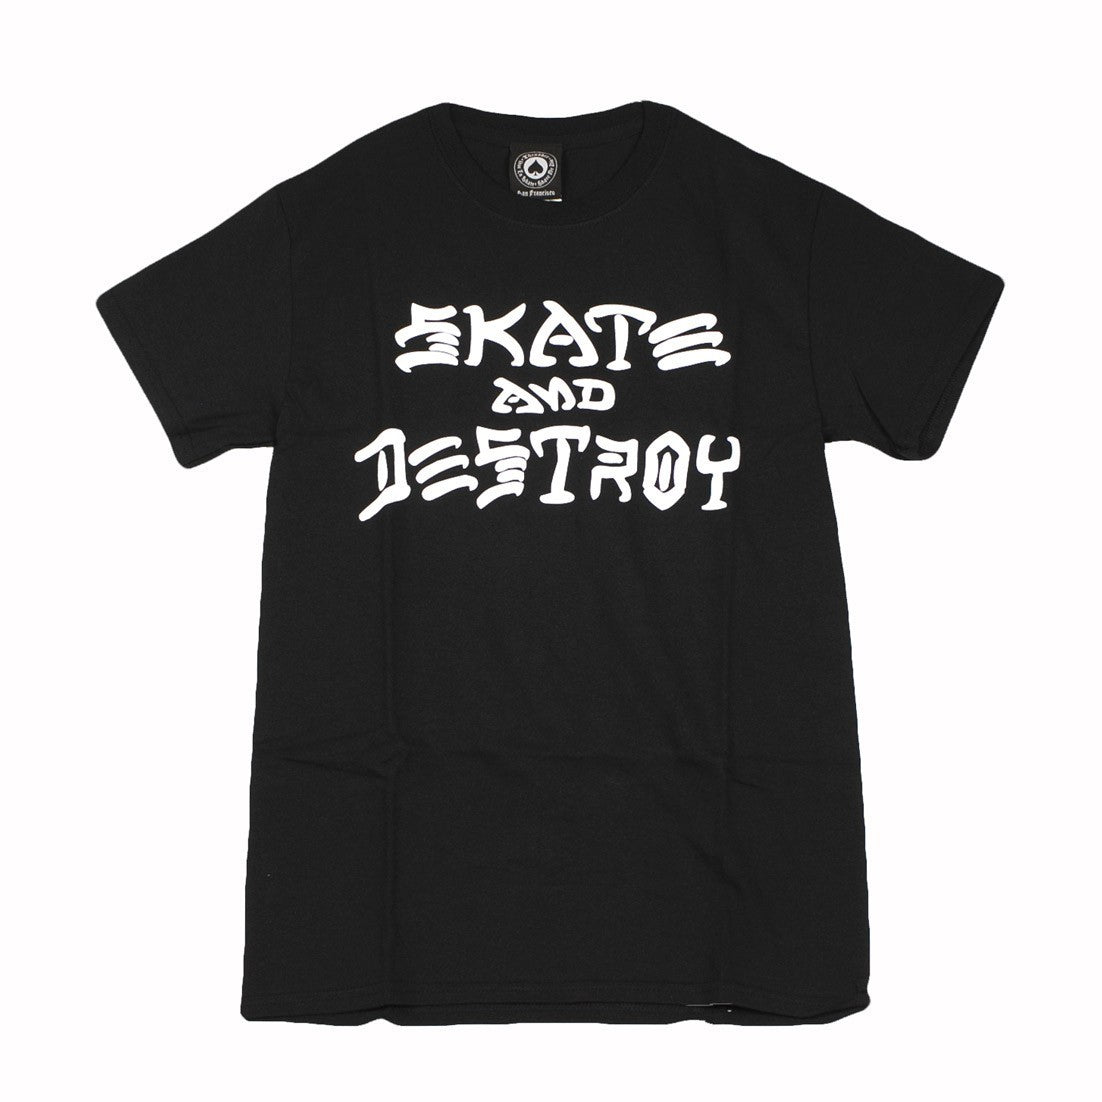 Thrasher, Maglietta Uomo Skate & Destroy Tee, Black/white